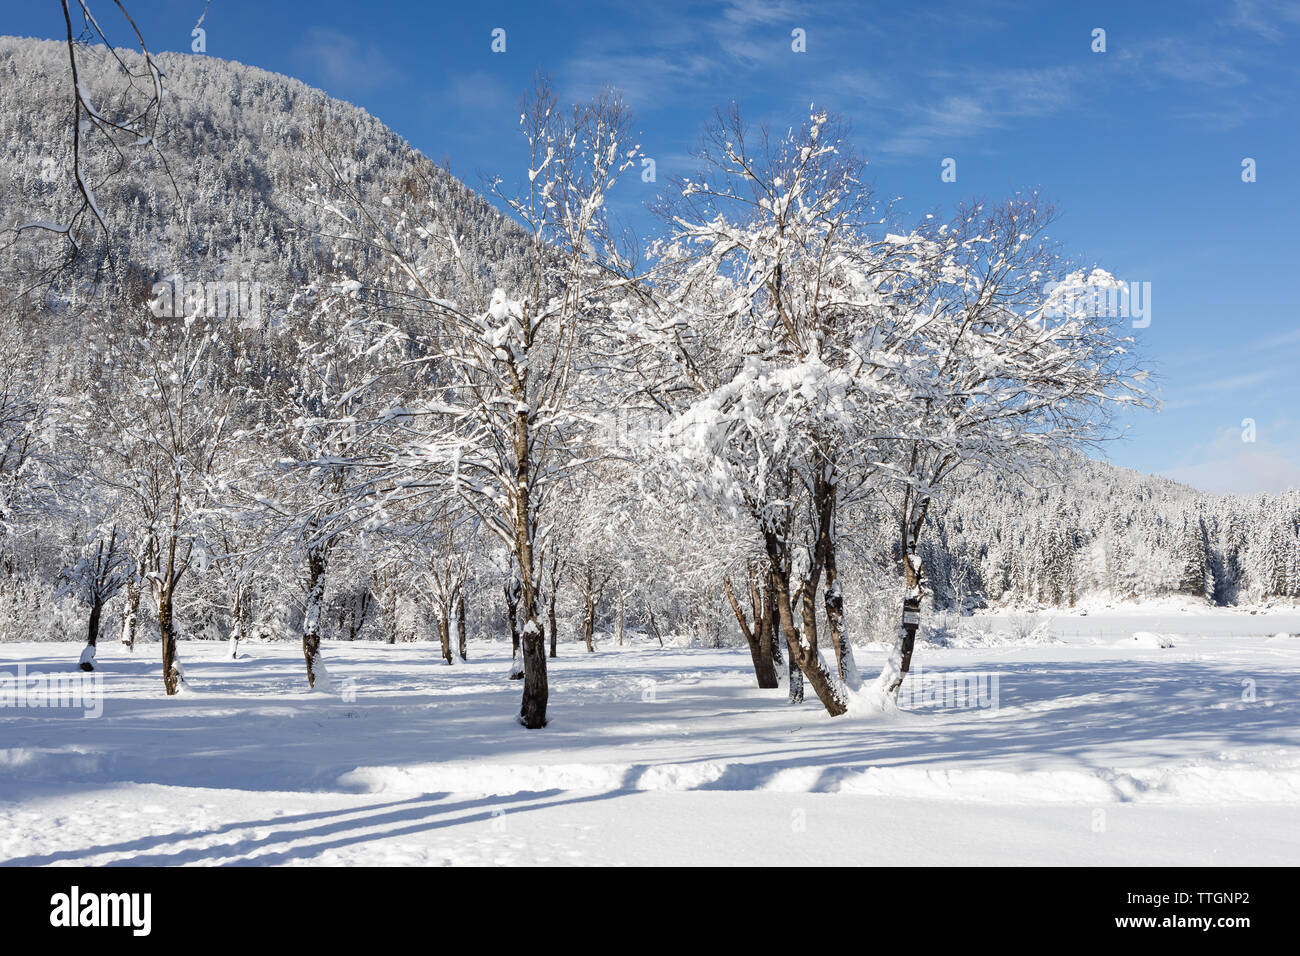 Snowy landscape on mountains during winter season Stock Photo